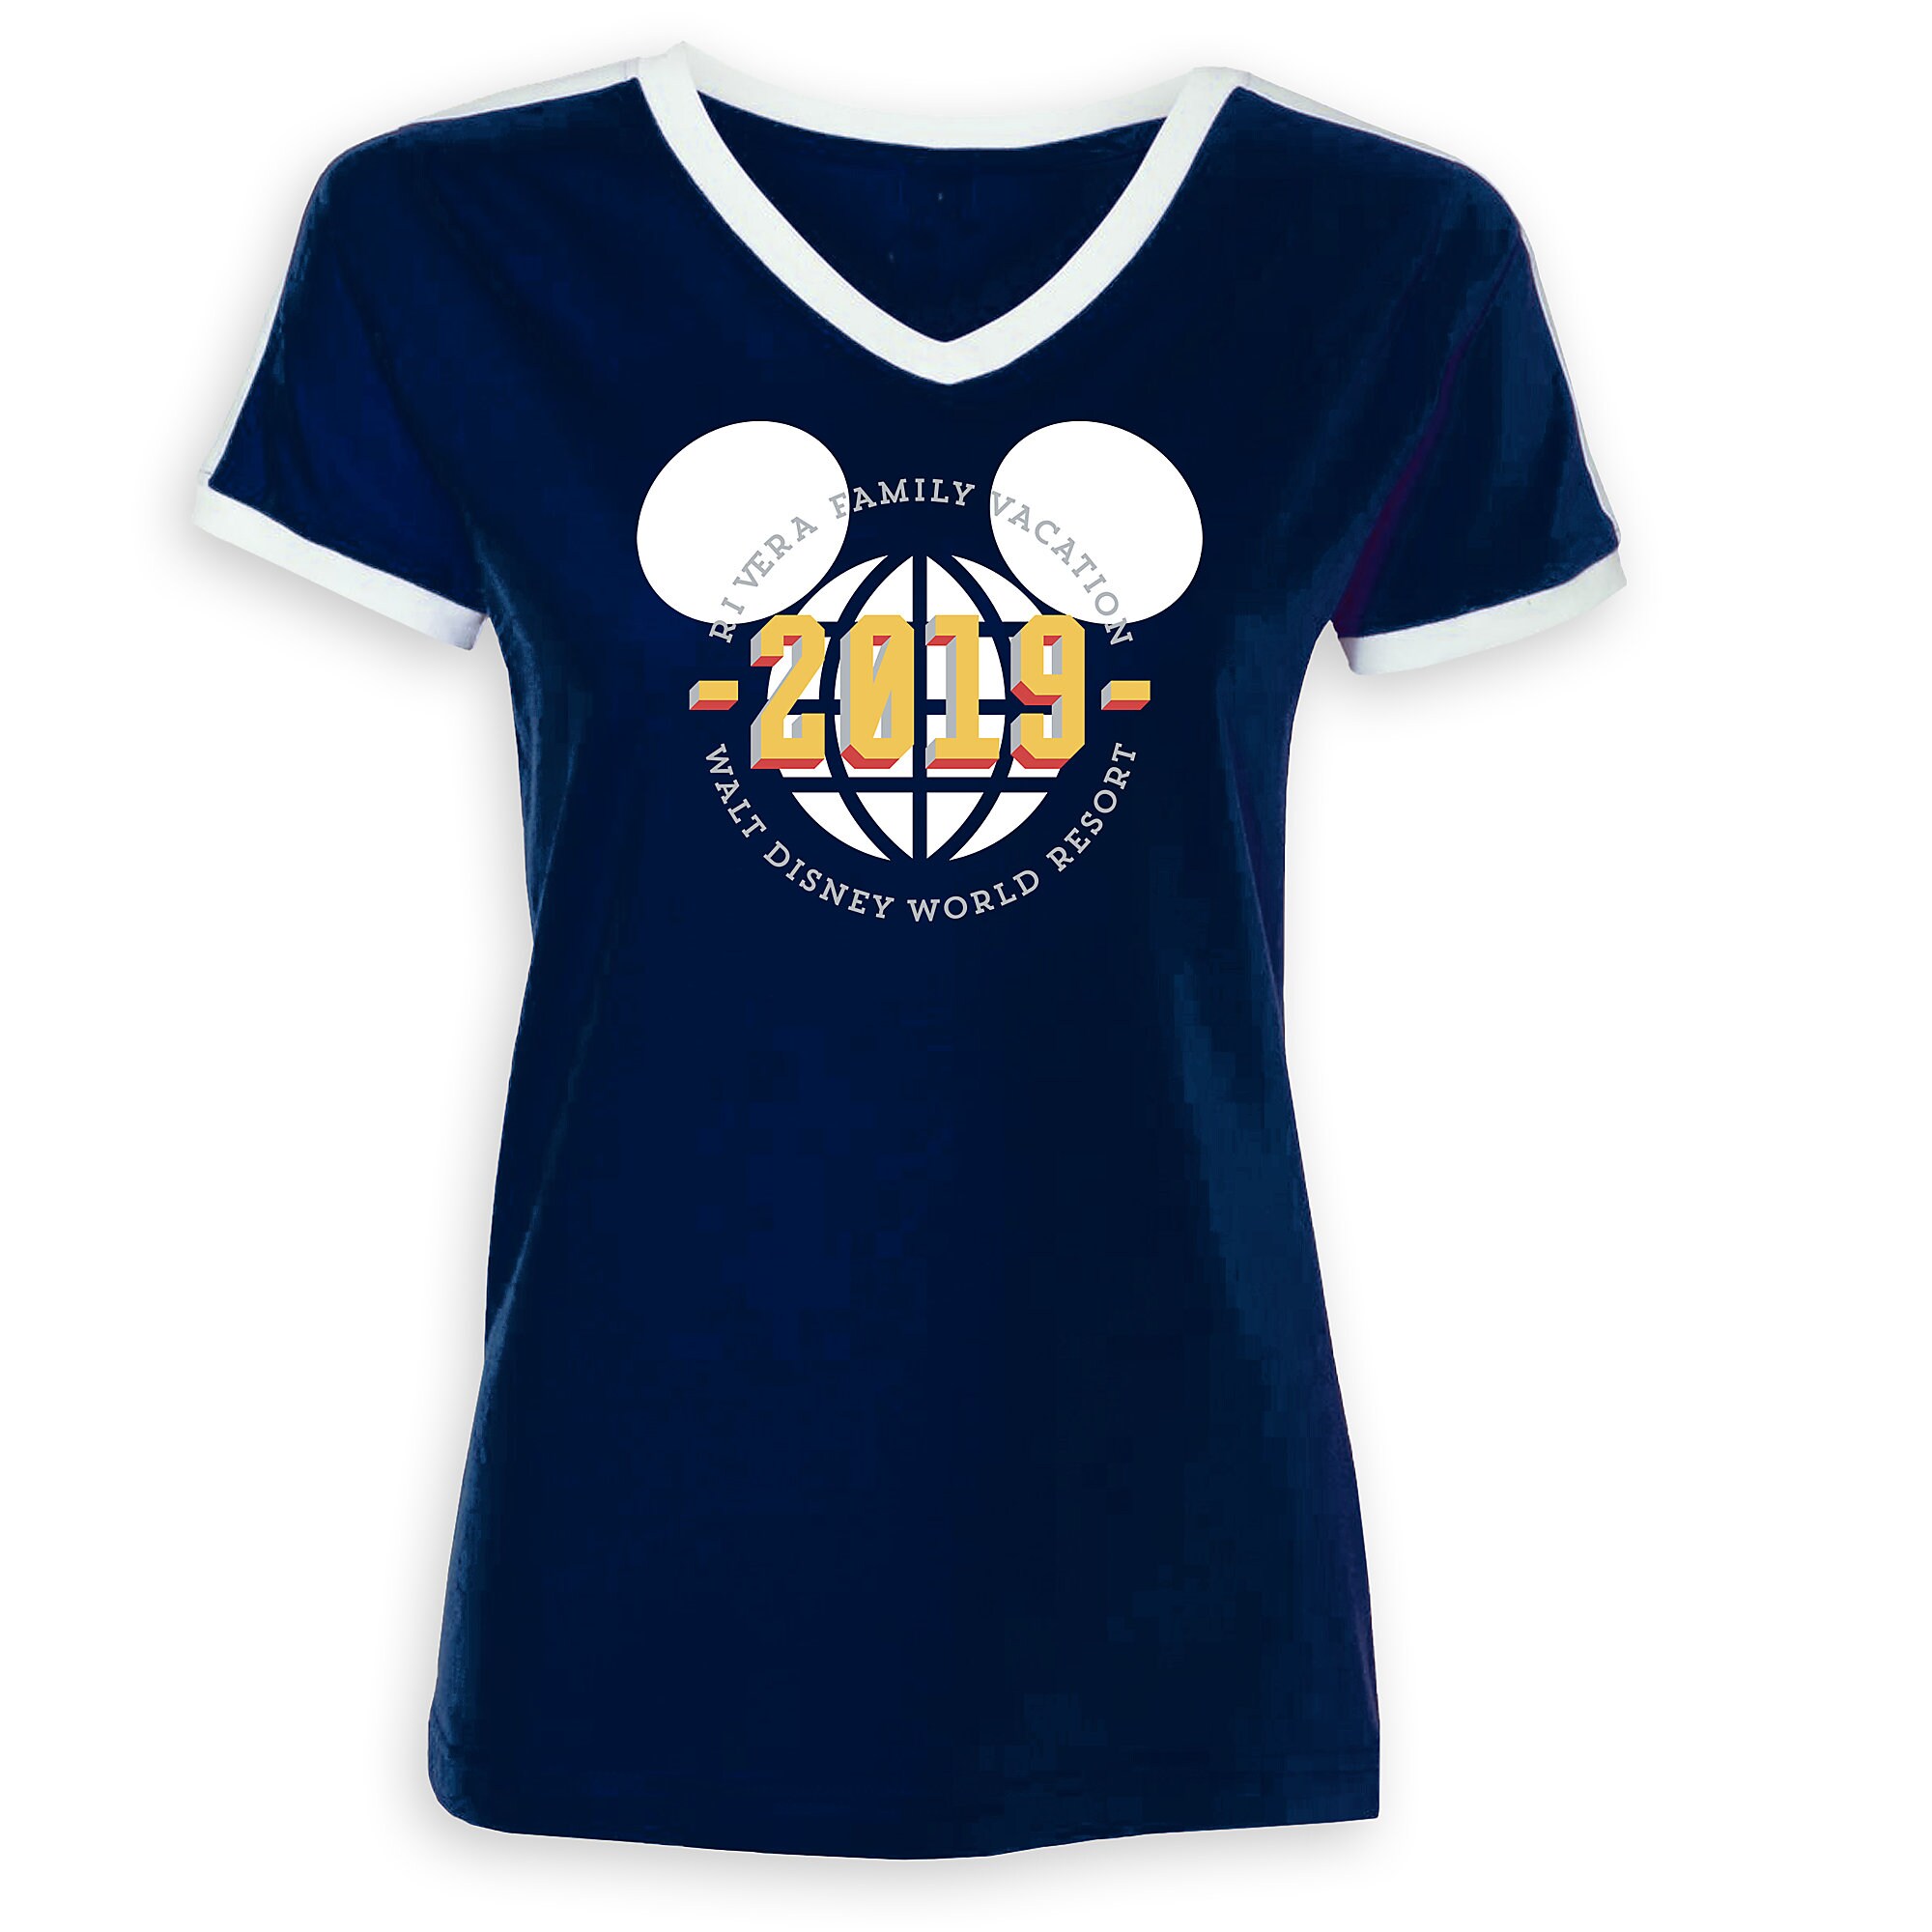 Women's Mickey Mouse Family Vacation Soccer T-Shirt - Walt Disney World Resort - 2019 - Customized